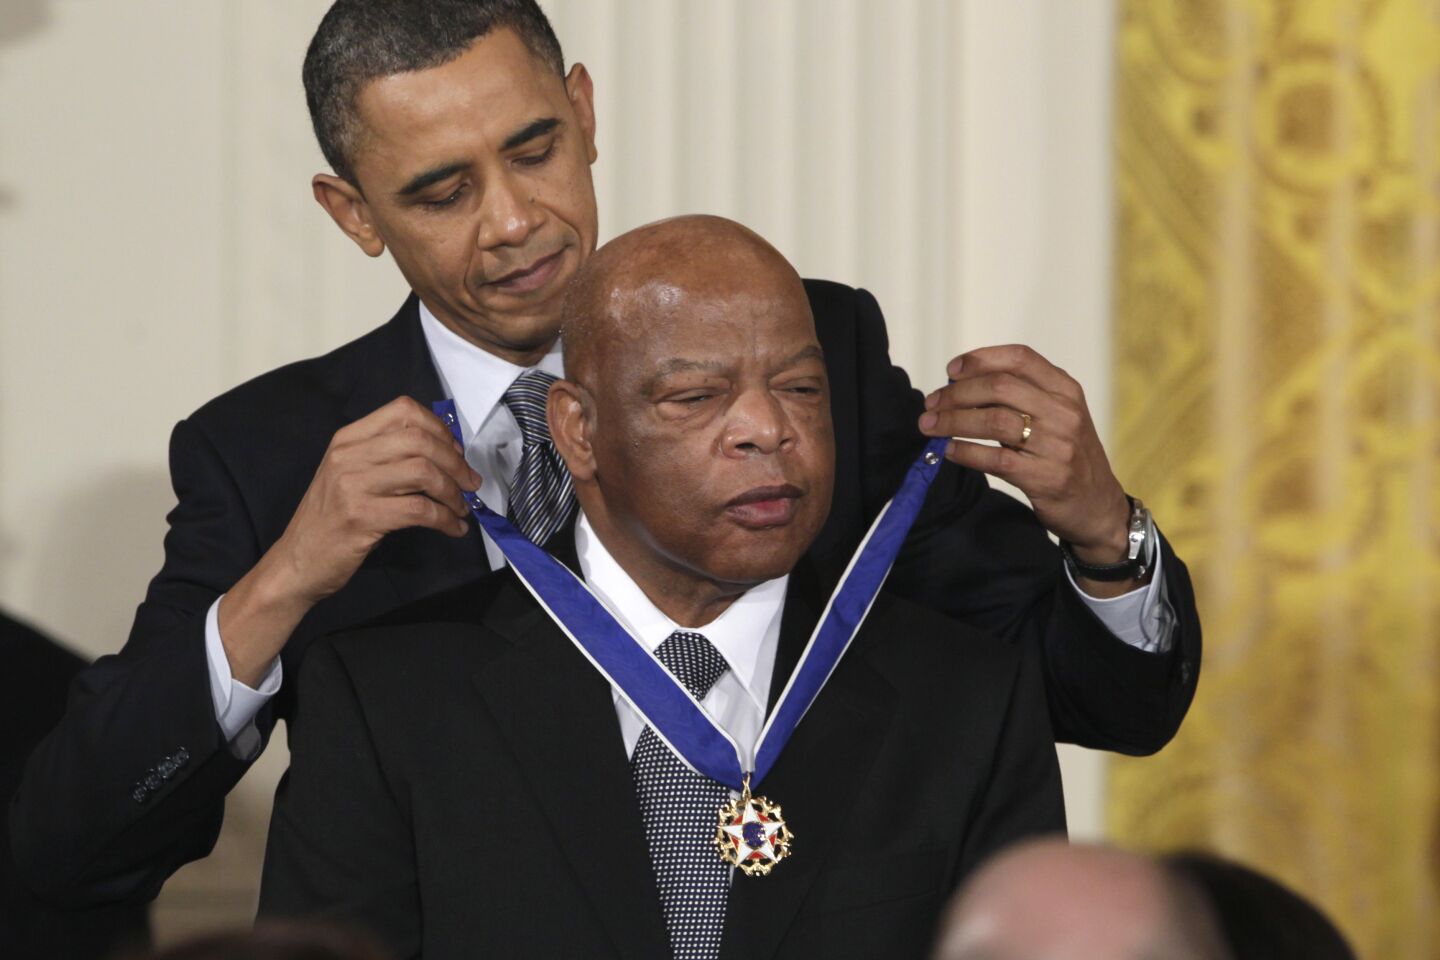 President Obama wraps the Presidential Medal of Freedom around the neck of Rep. John Lewis